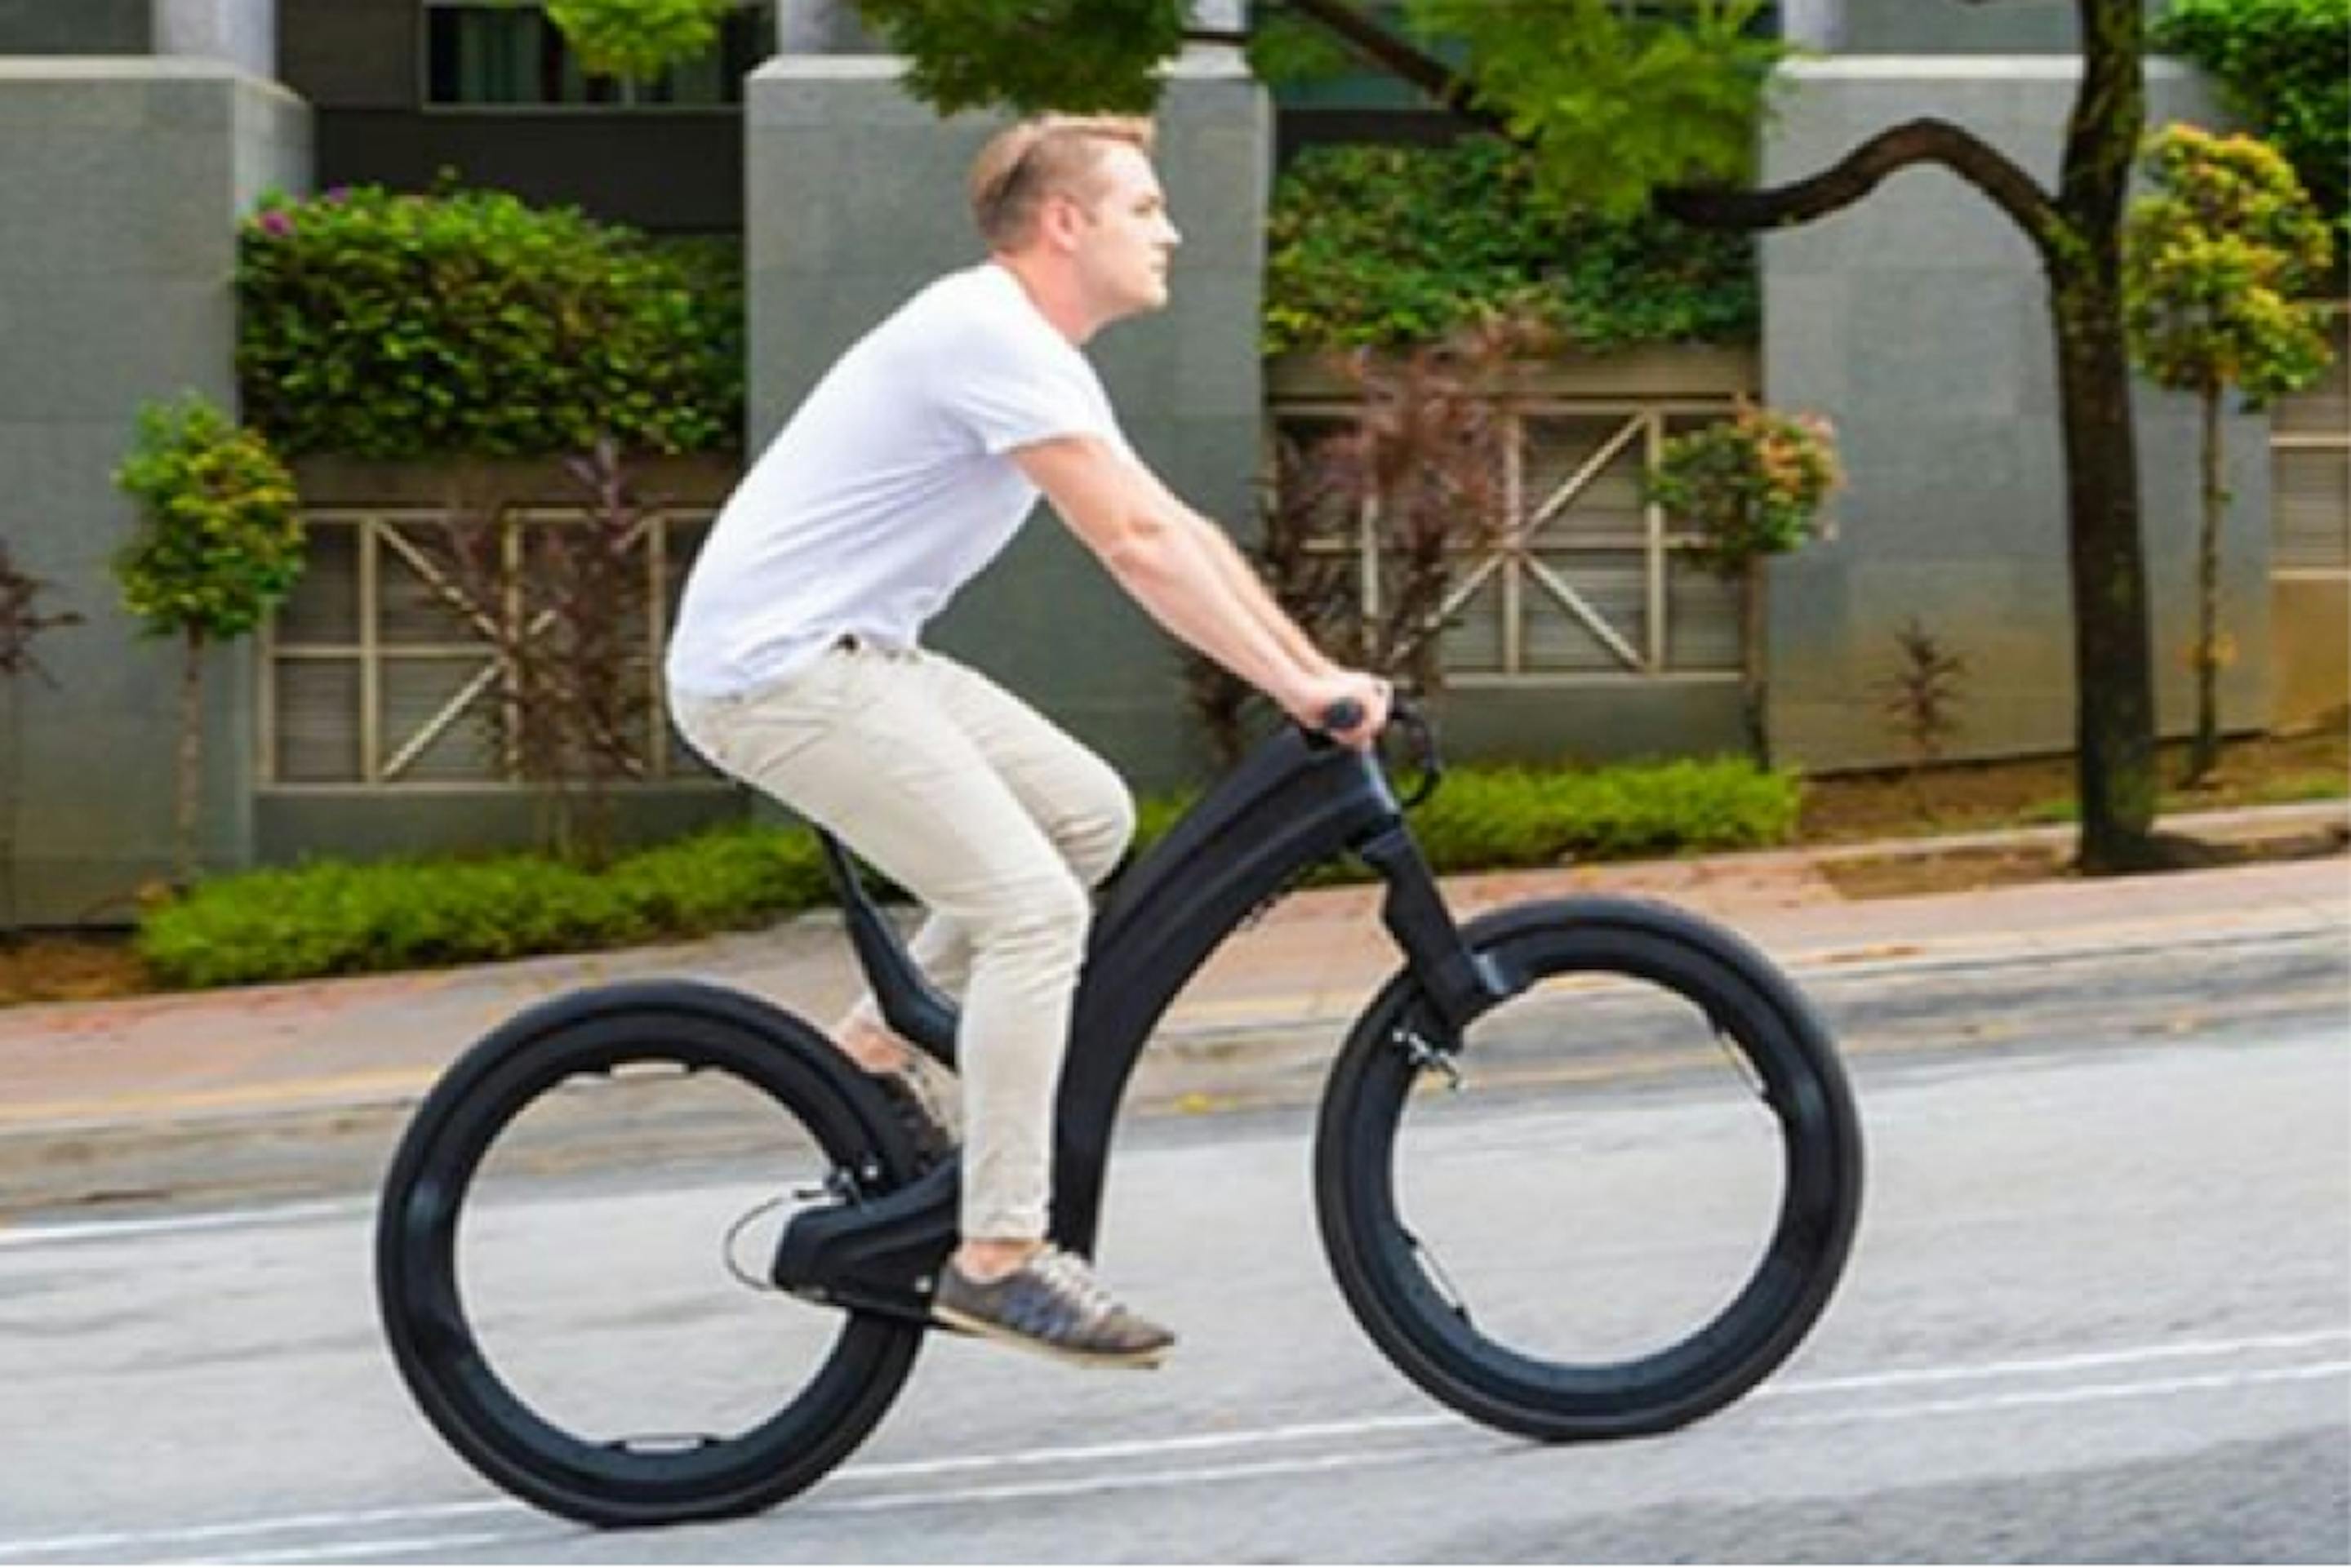 Man on futuristic looking bicycle